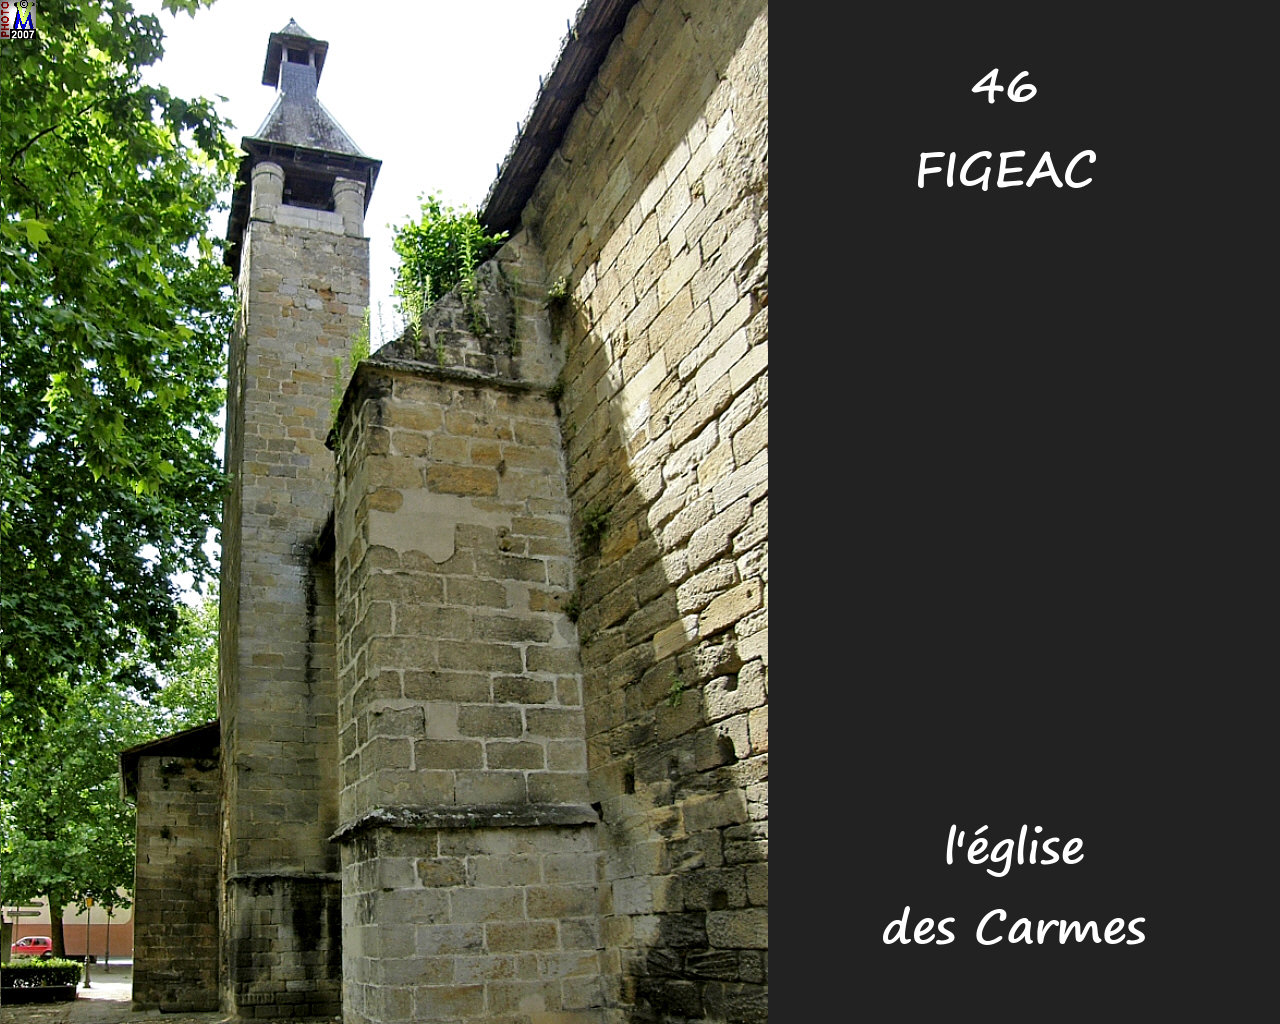 46FIGEAC_eglise-carmes_102.jpg